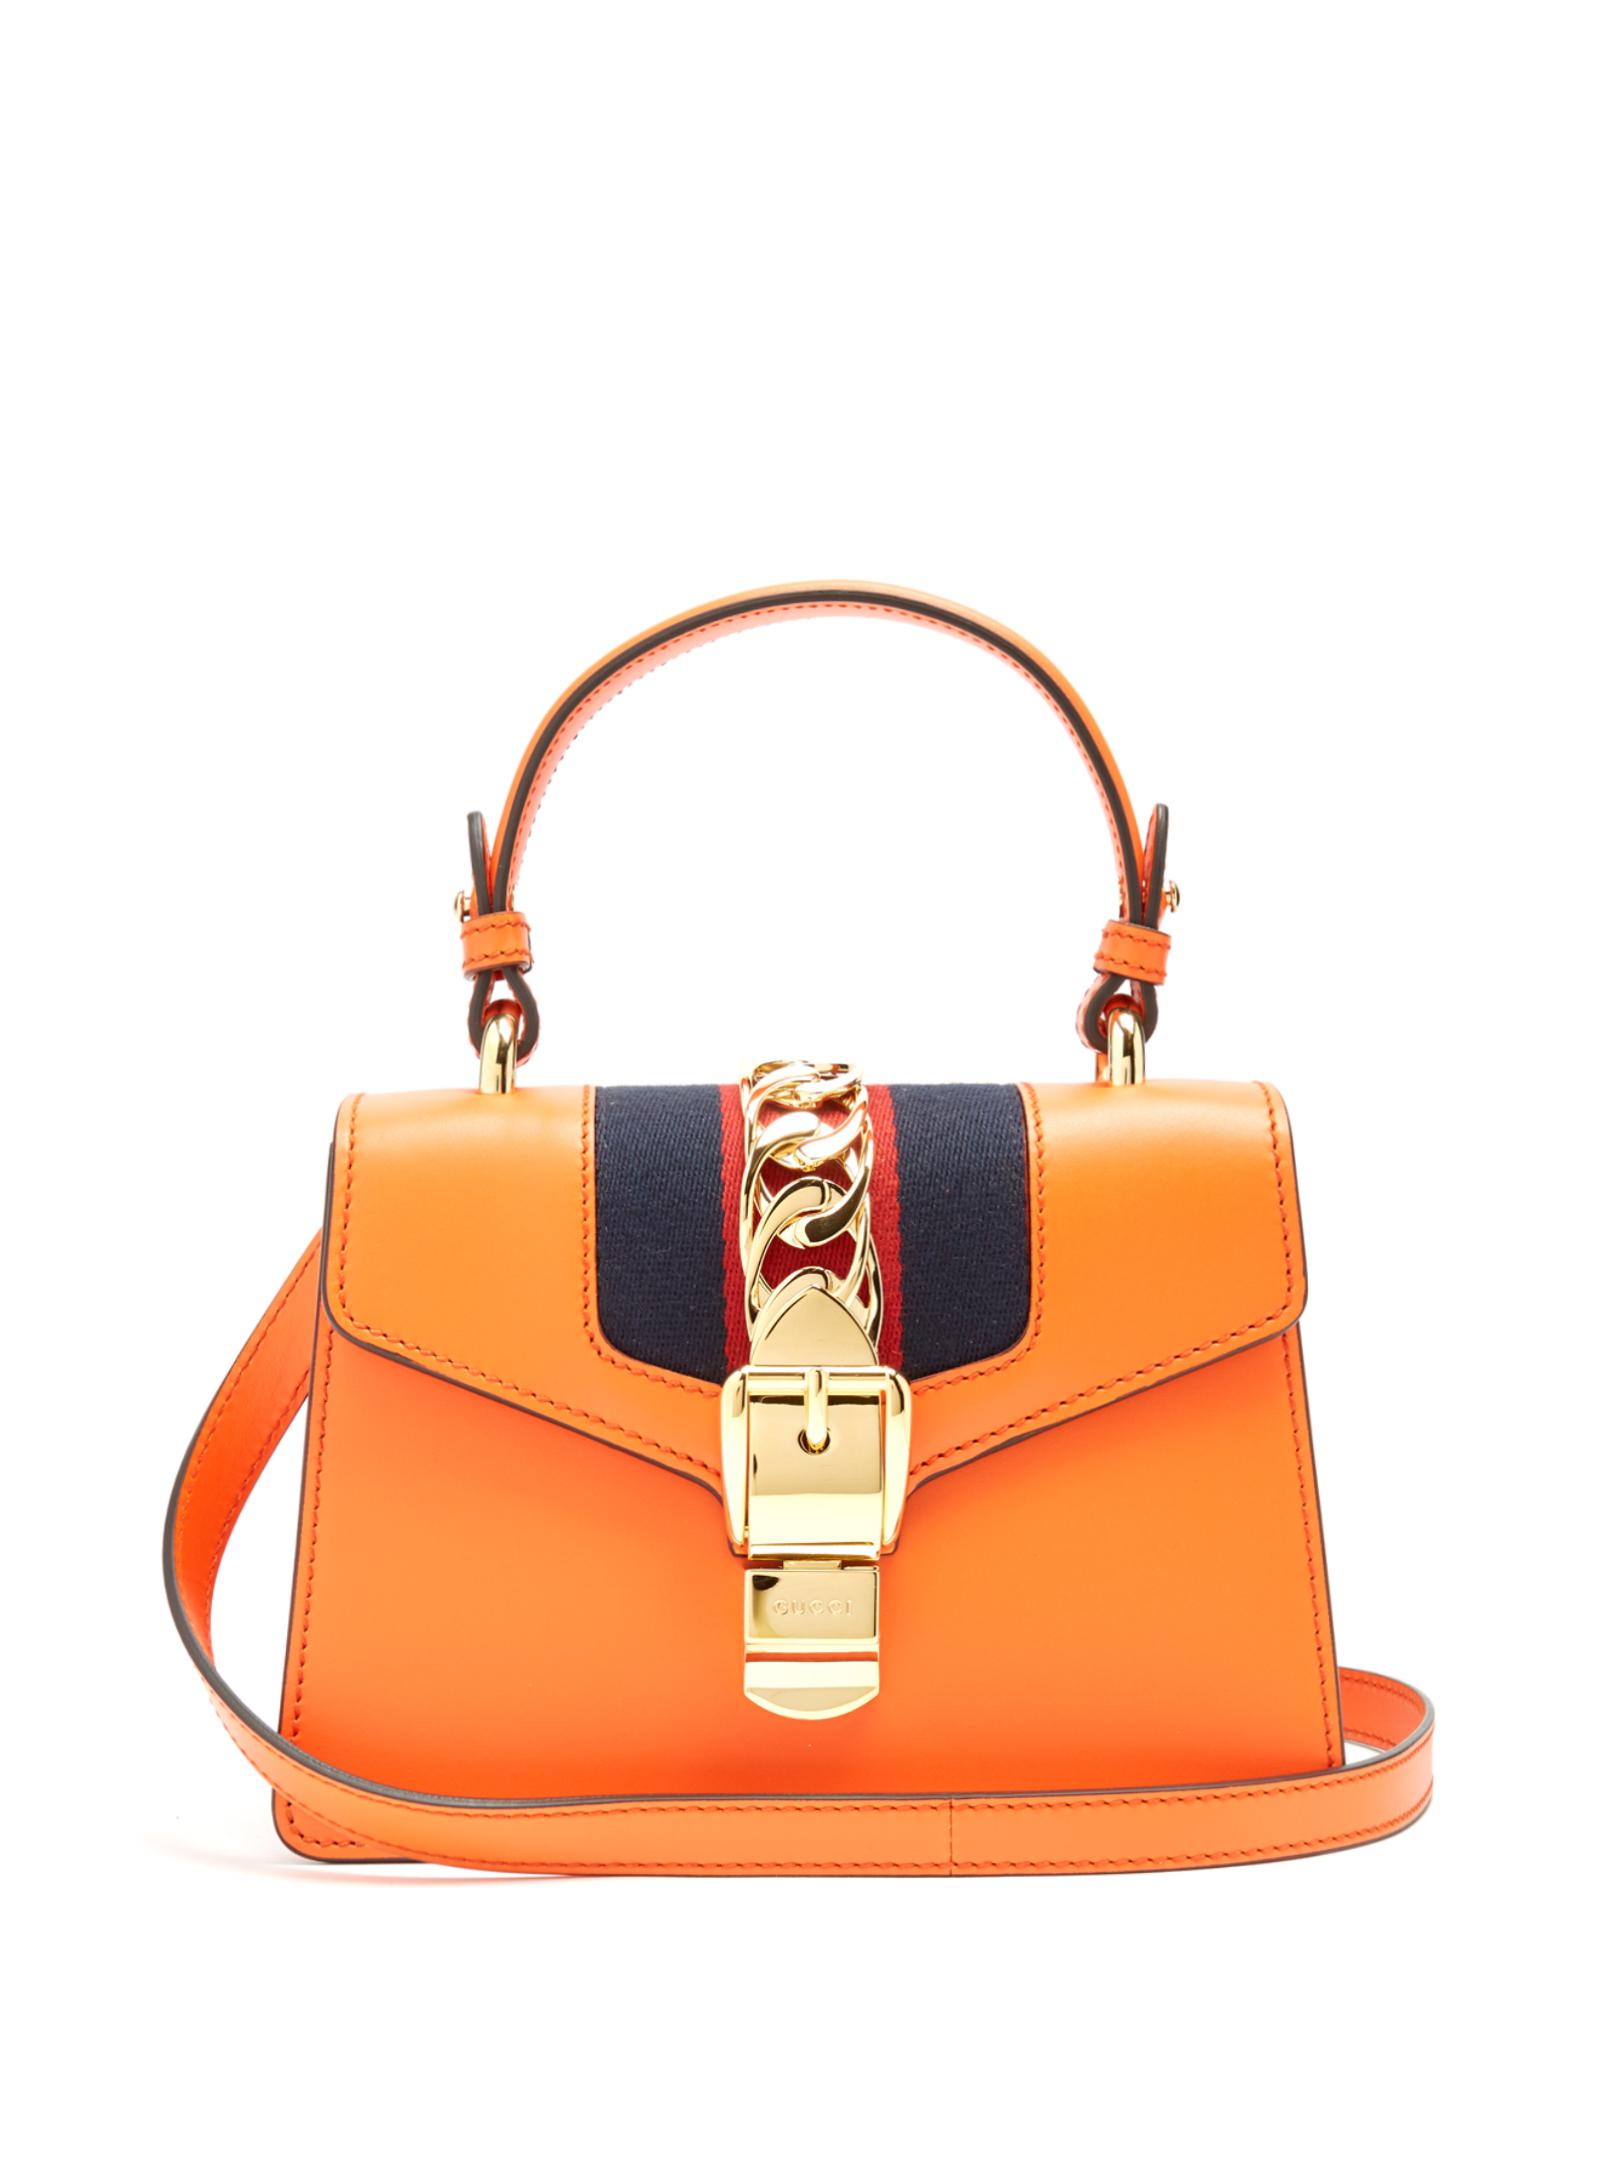 Lyst - Gucci Sylvie Mini Leather Shoulder Bag in Orange